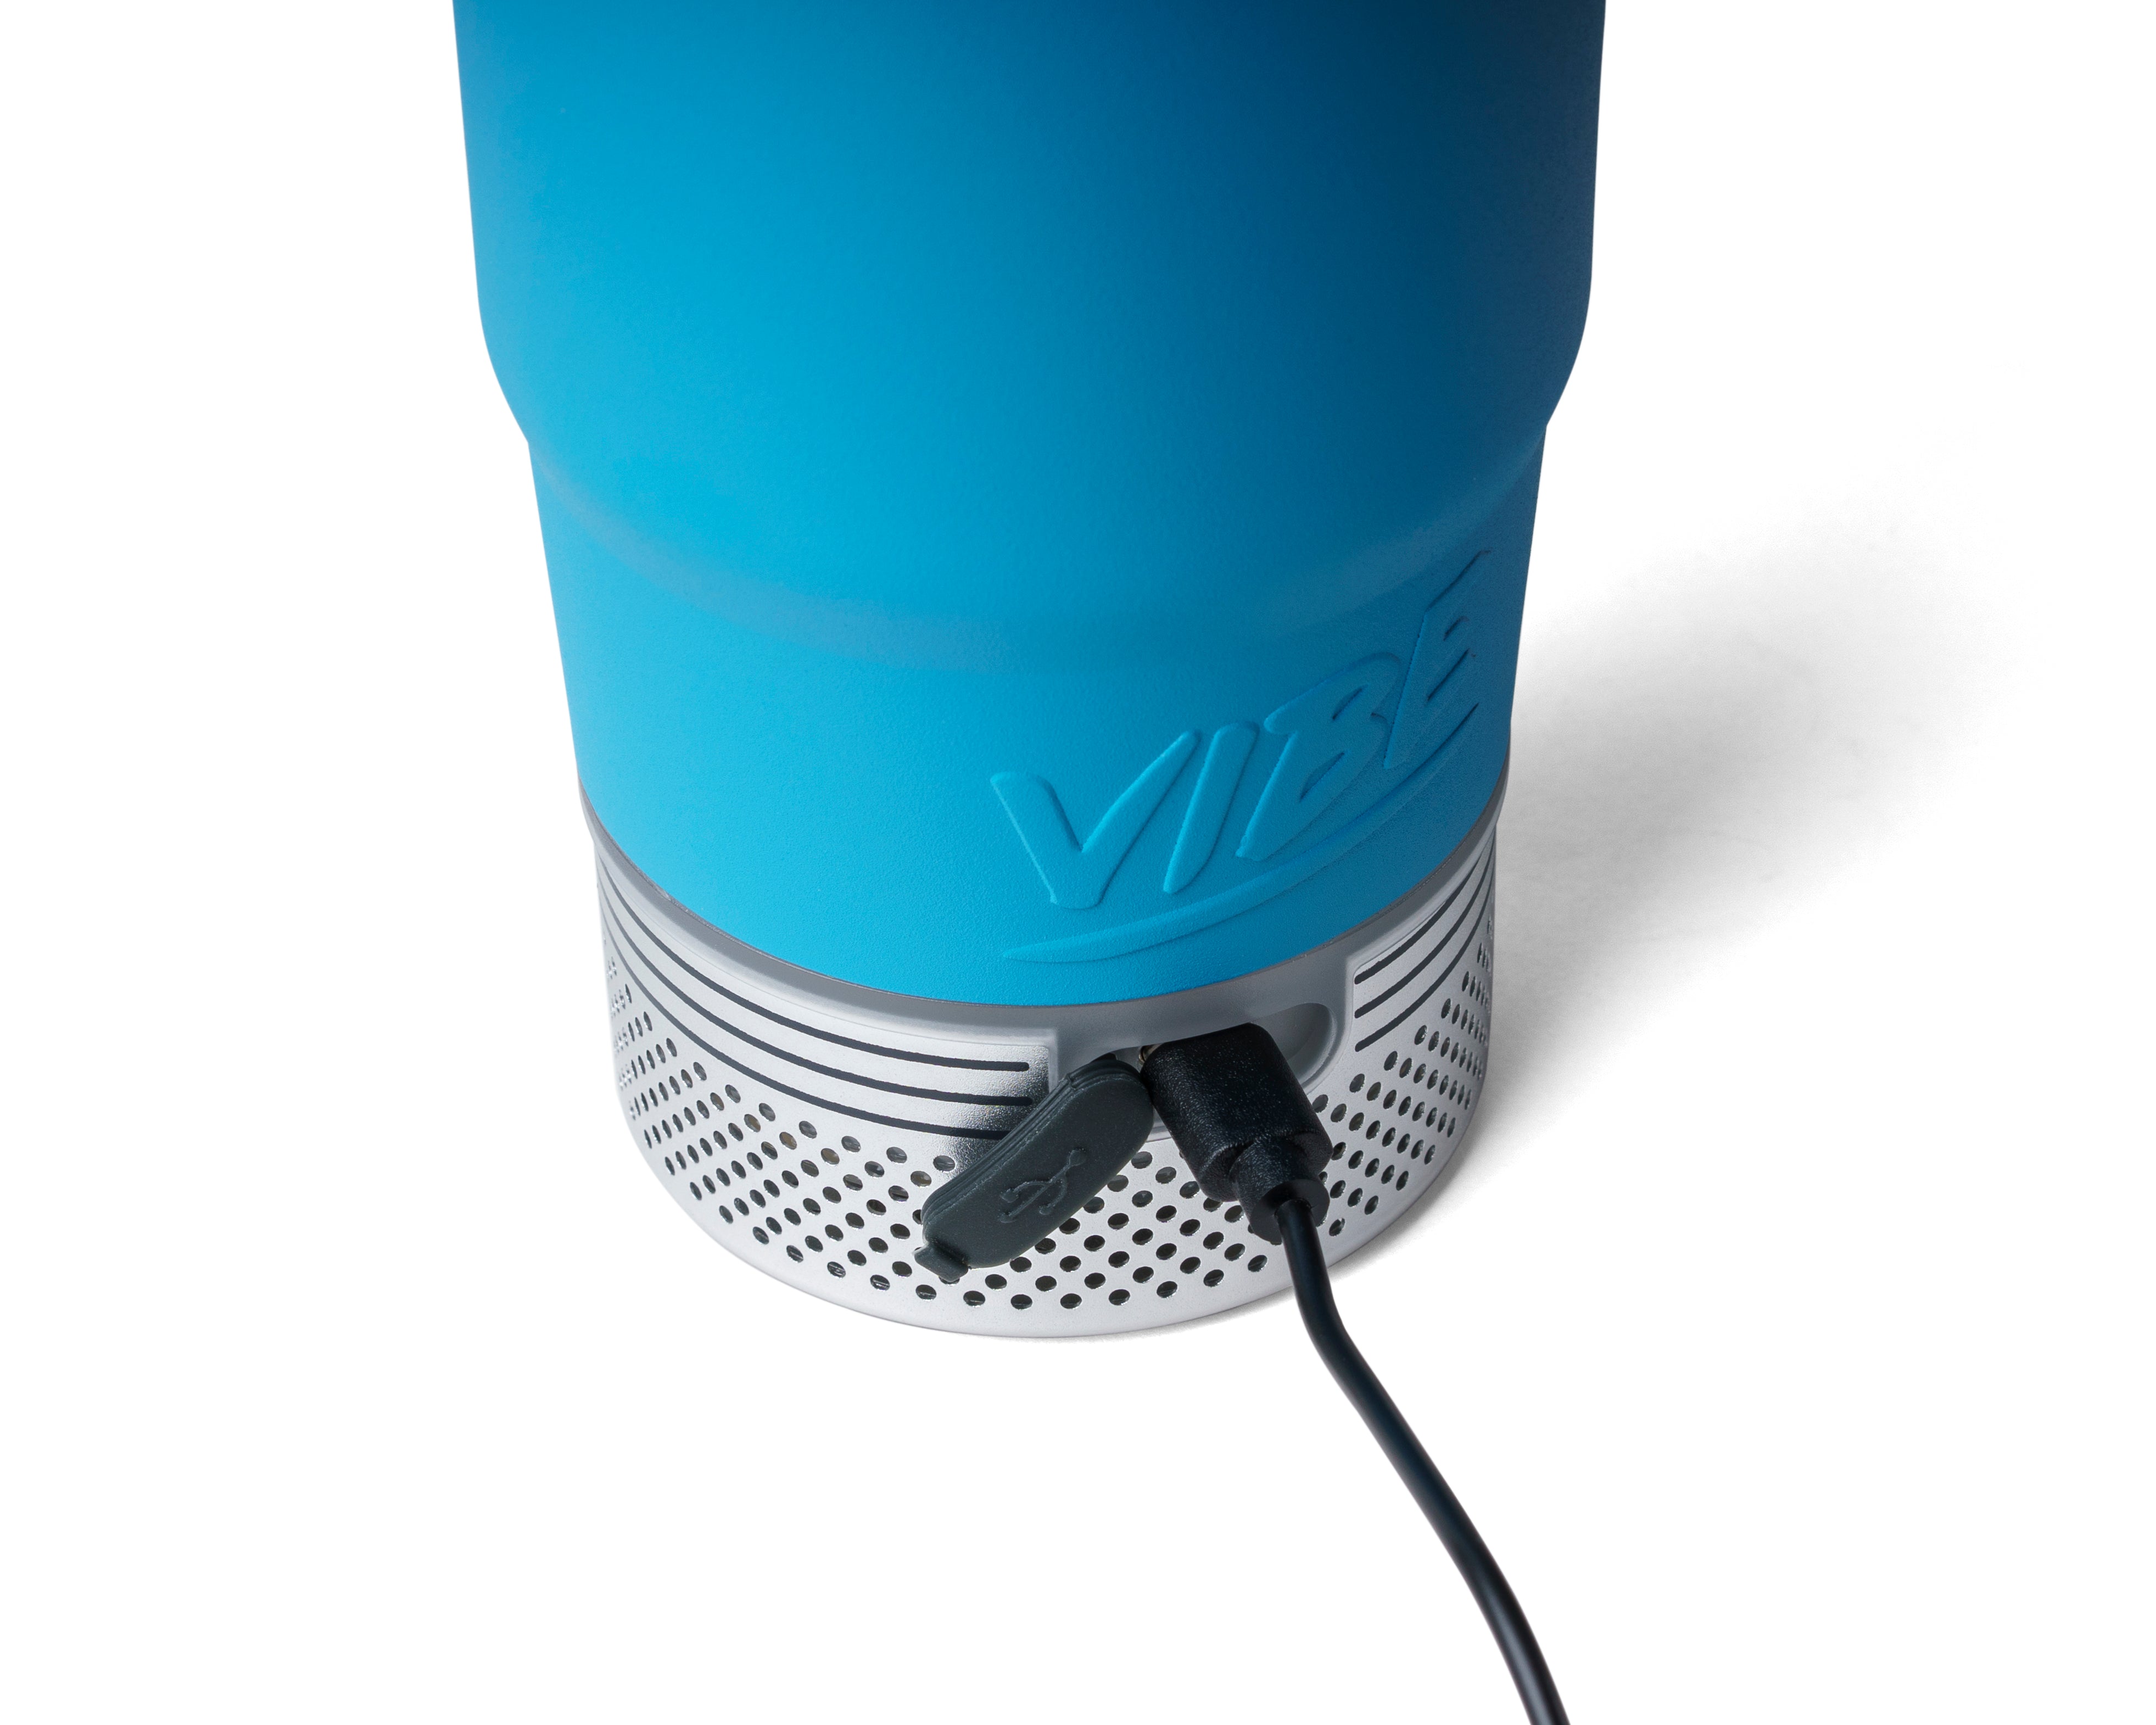 4 in 1 Bluetooth Speaker Beverage Cooler